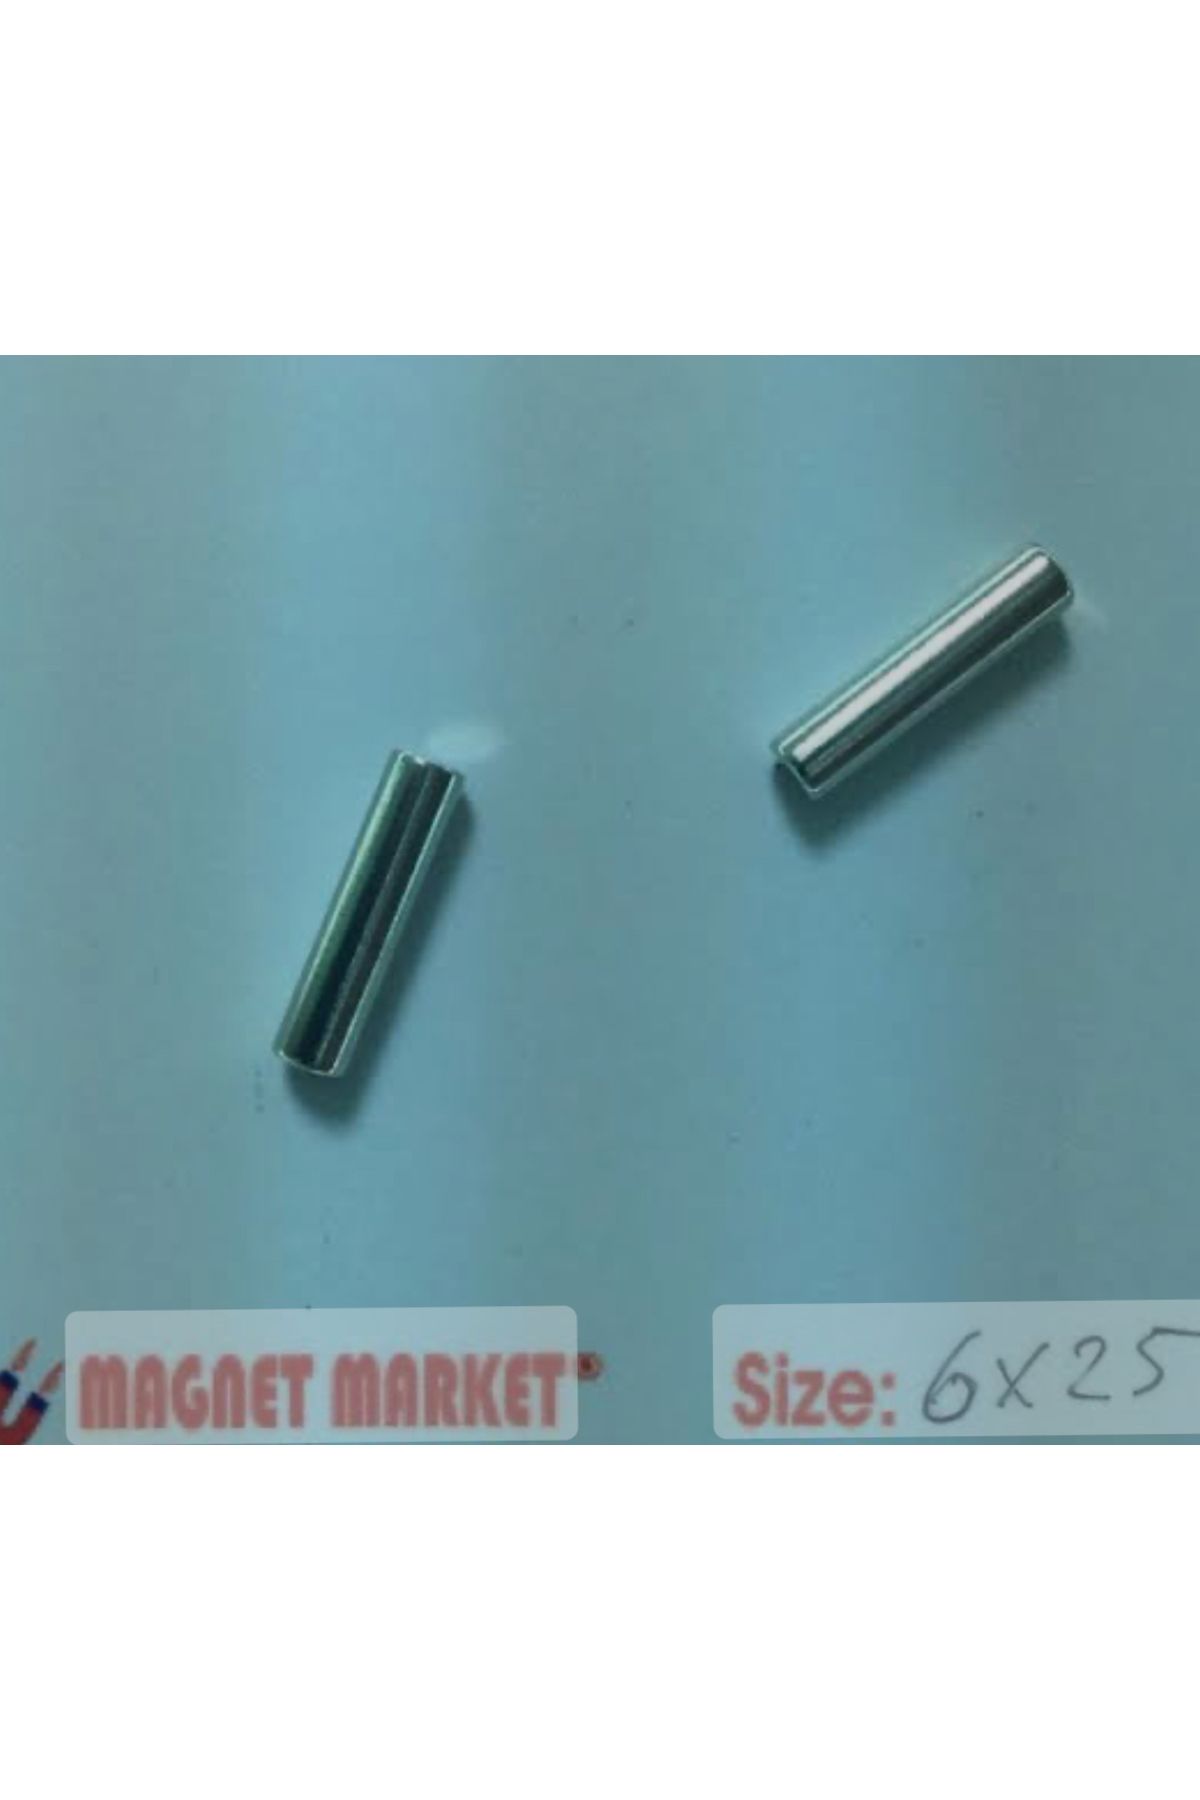 magnet market 30 Adet 6x25mm - Çap 6mm X Kalınlık 25mm Neodymium Magnet